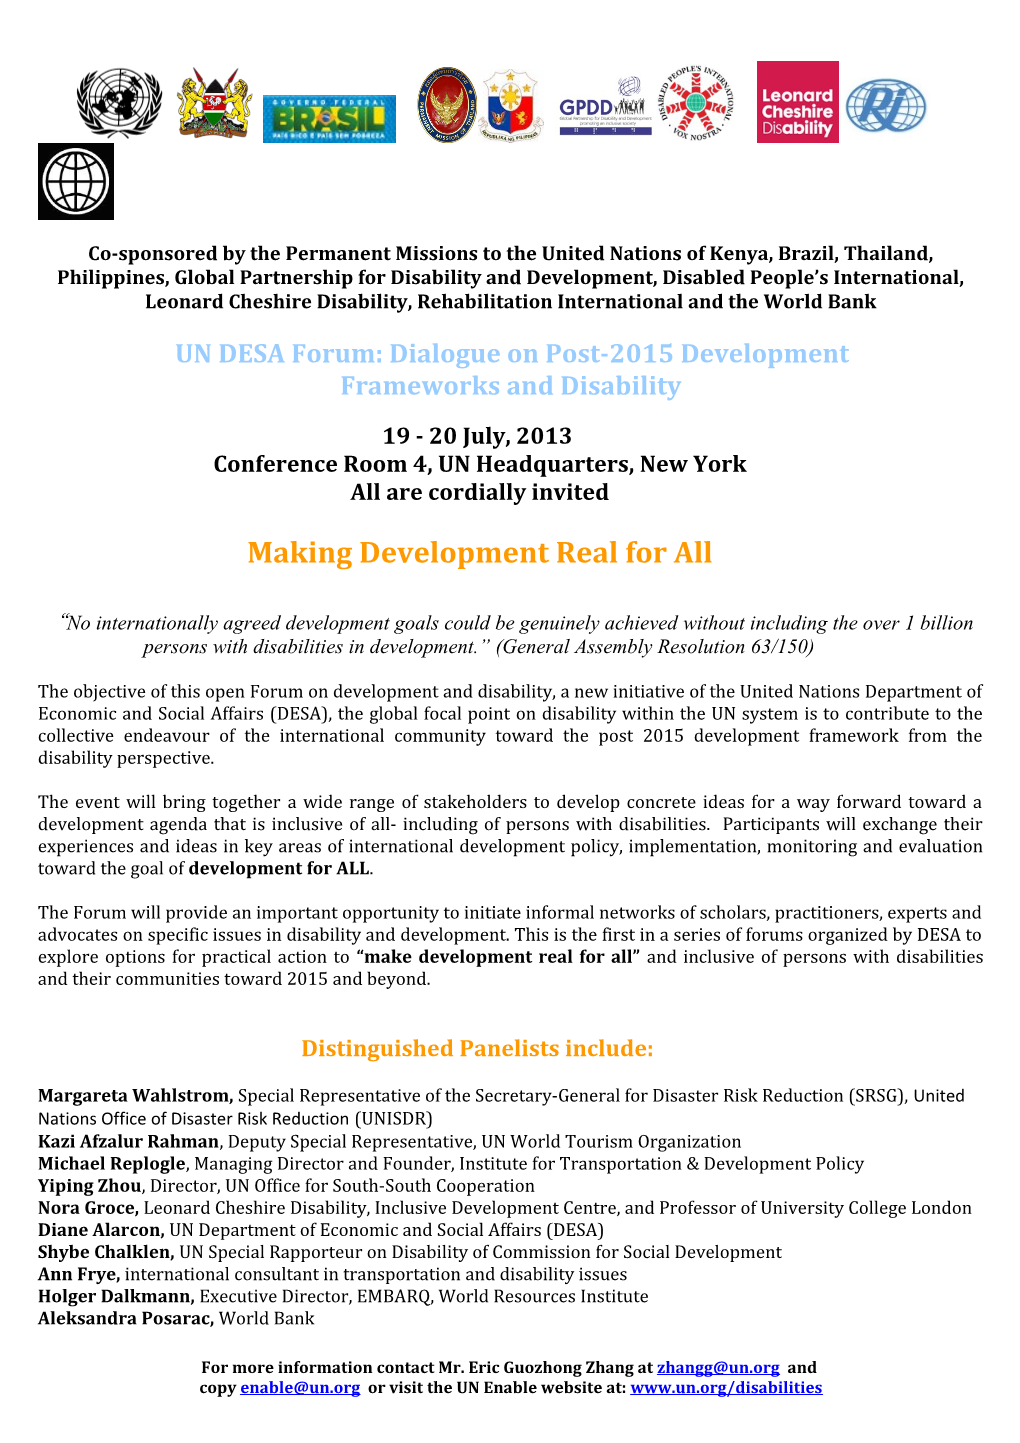 UN DESA Forum: Dialogue on Post-2015 Development